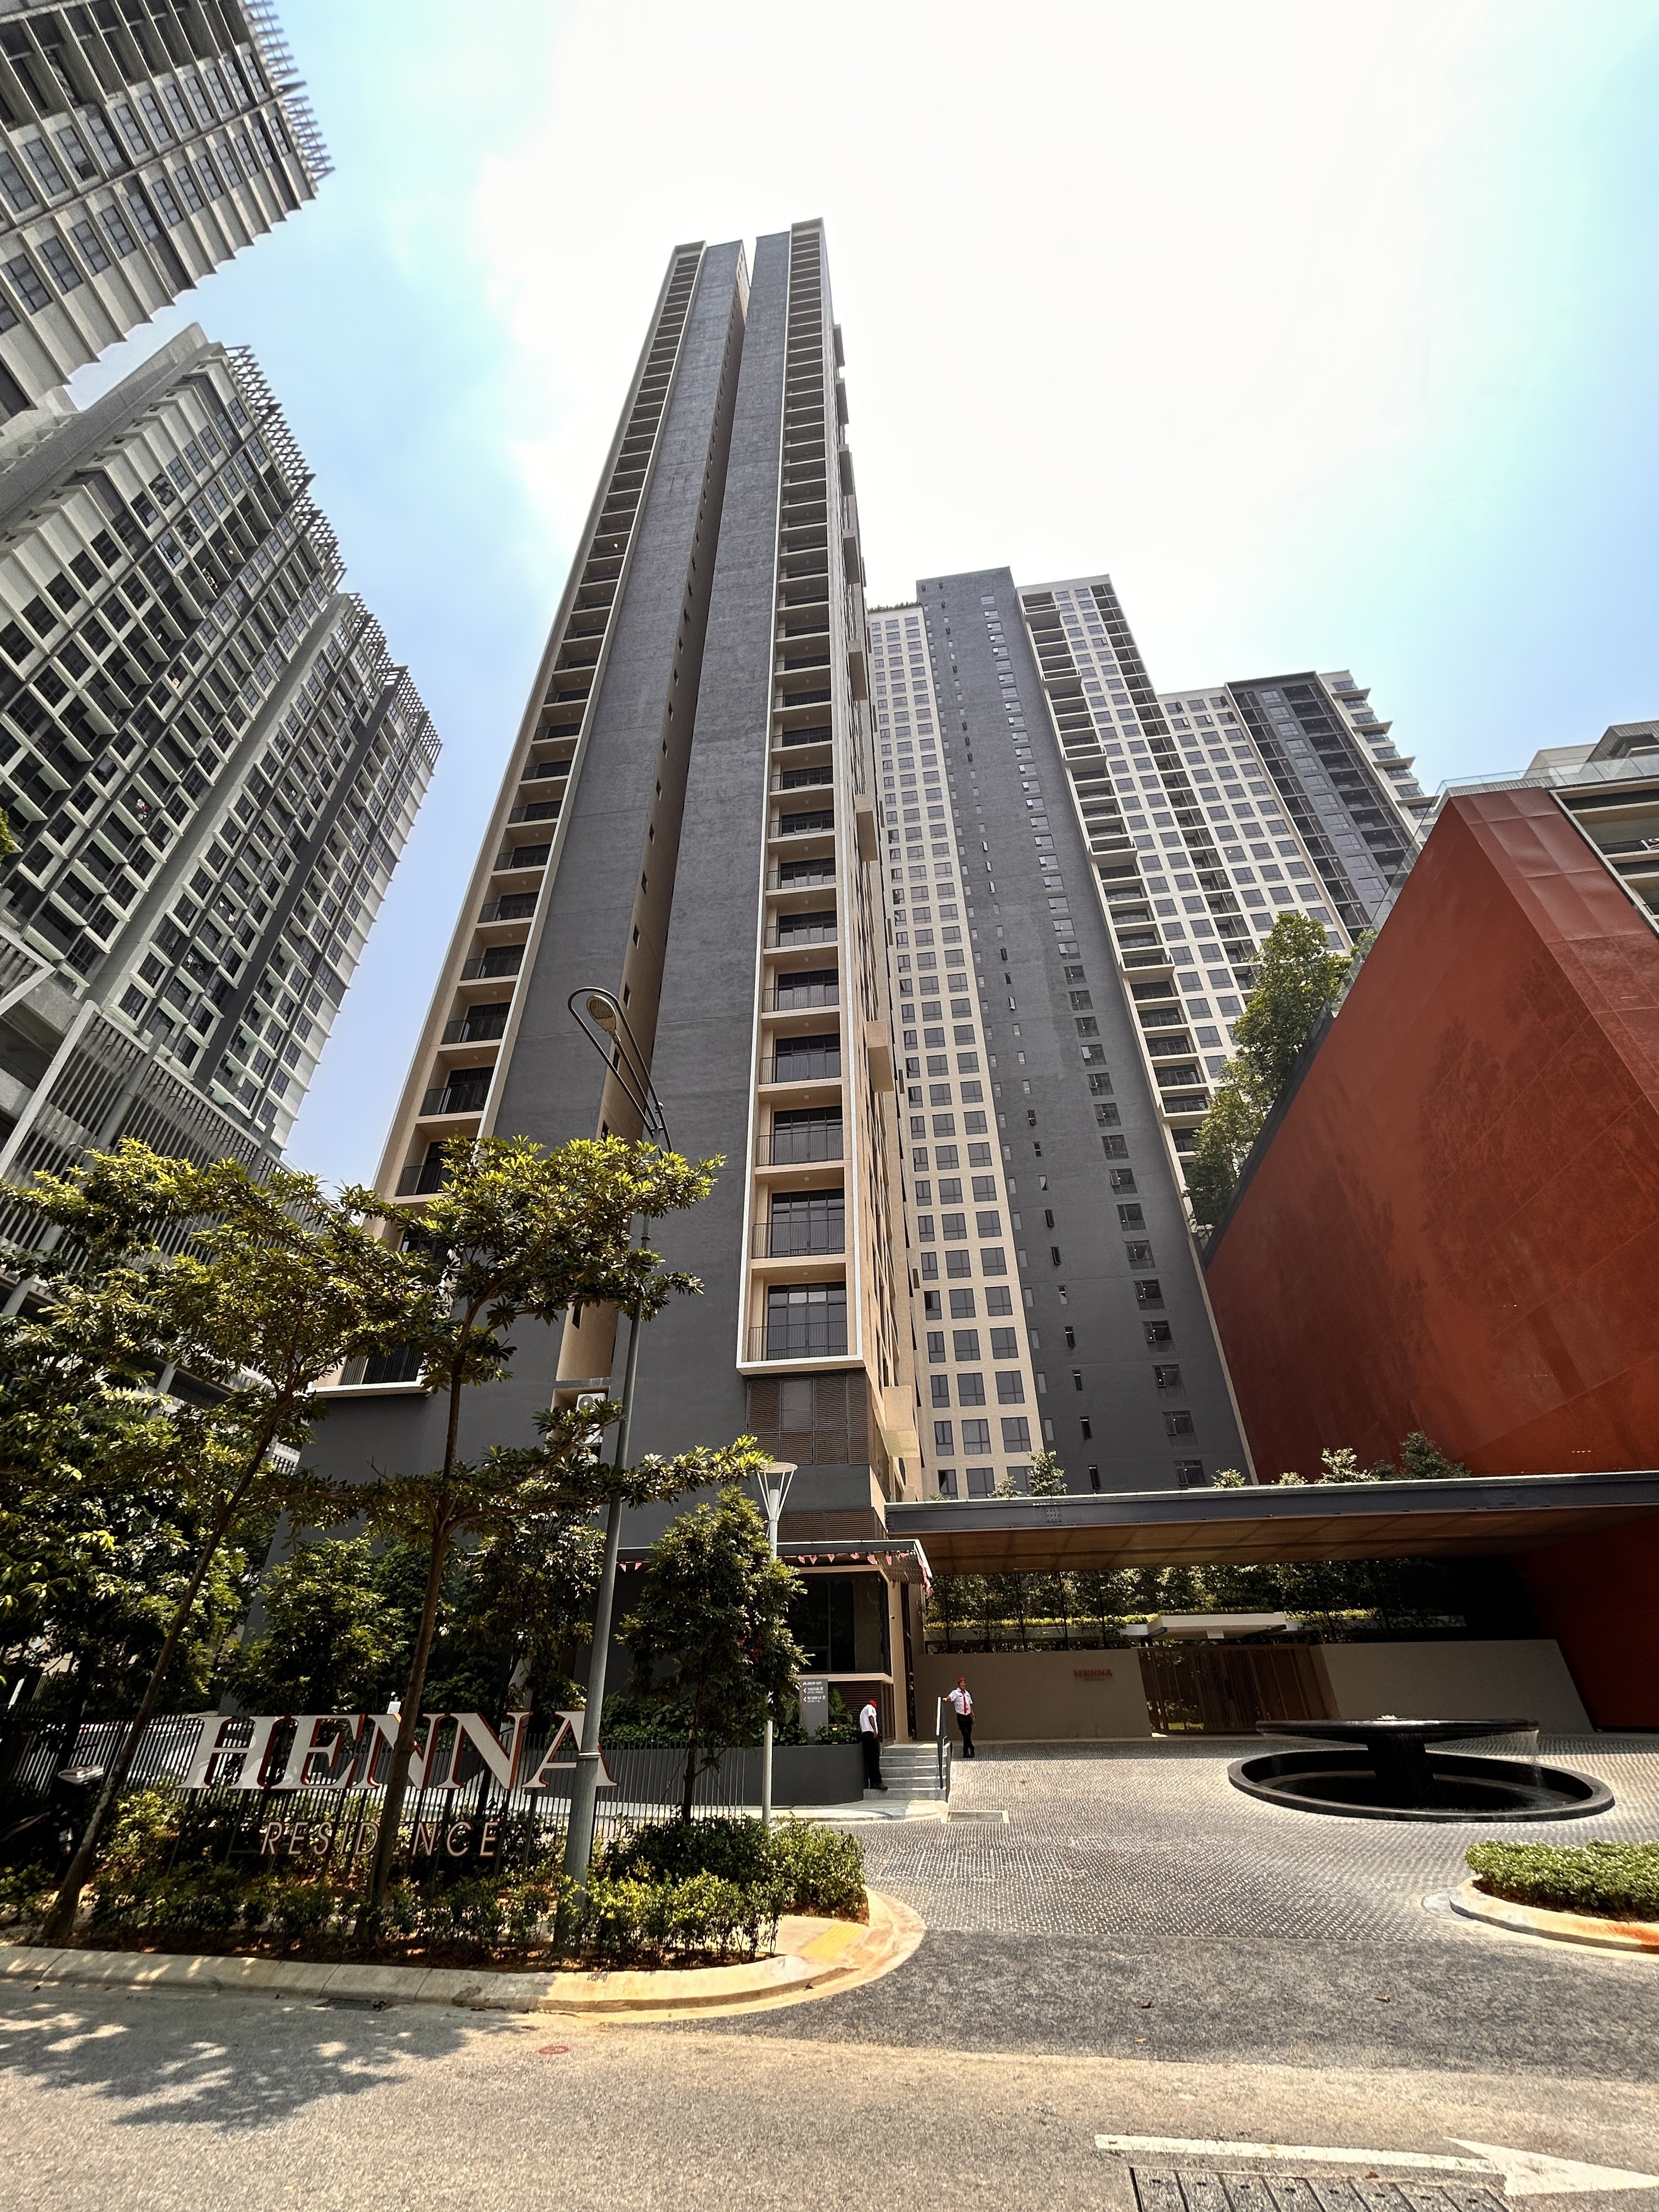 Fully Furnished Apartment 2 Rooms Condo LRT Henna Residence Wangsa Maju Setapak Kuala Lumpur For Rent